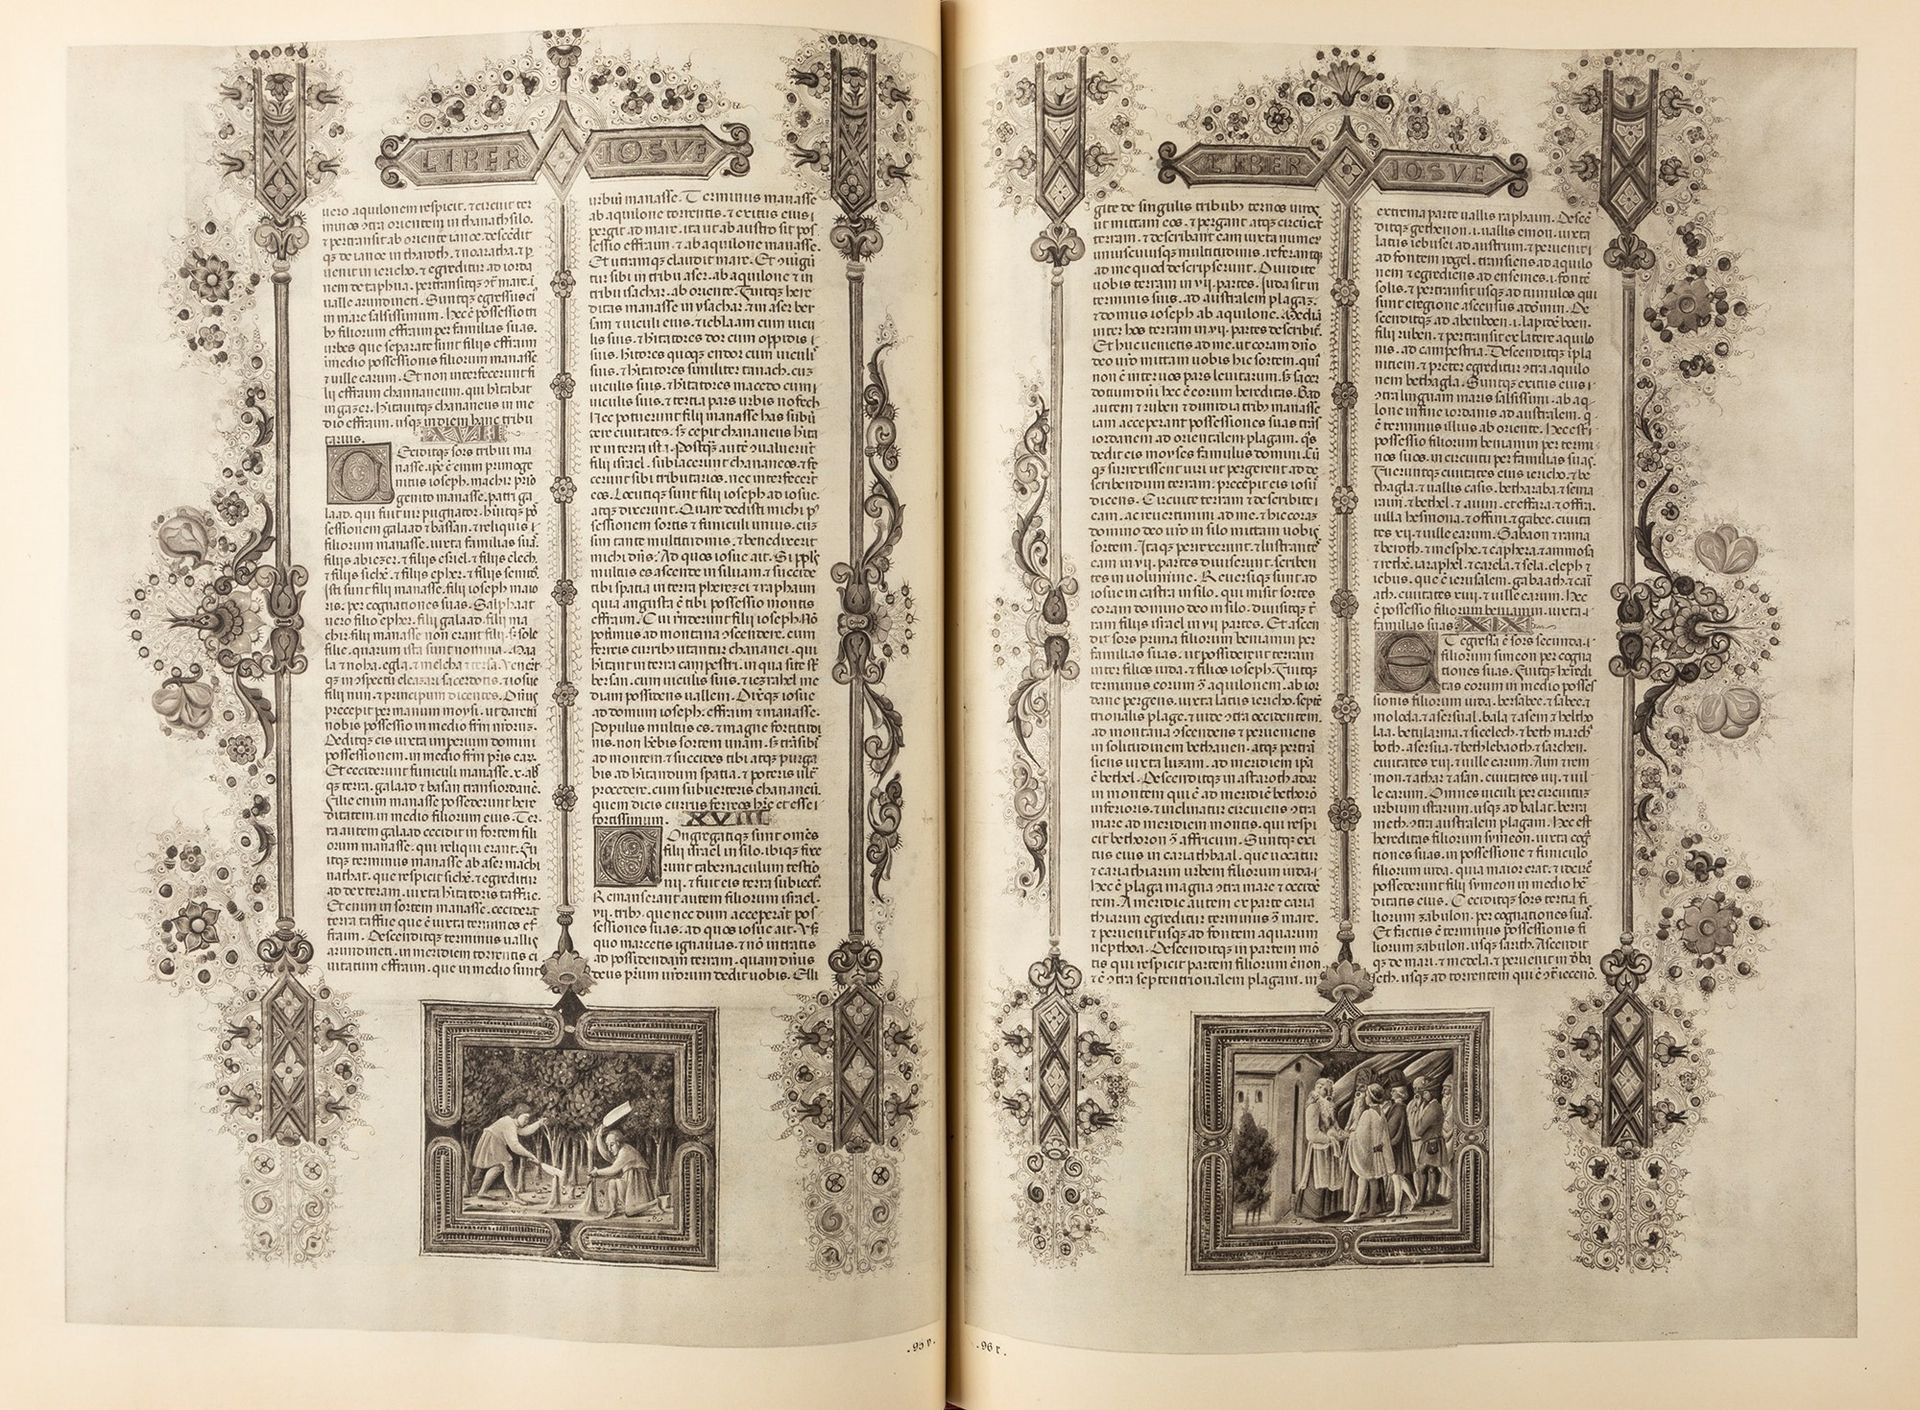 Null La Bible de Borso D'este

Milan, Emilio Bestetti, 1937. 2 volumes. 410 x 30&hellip;